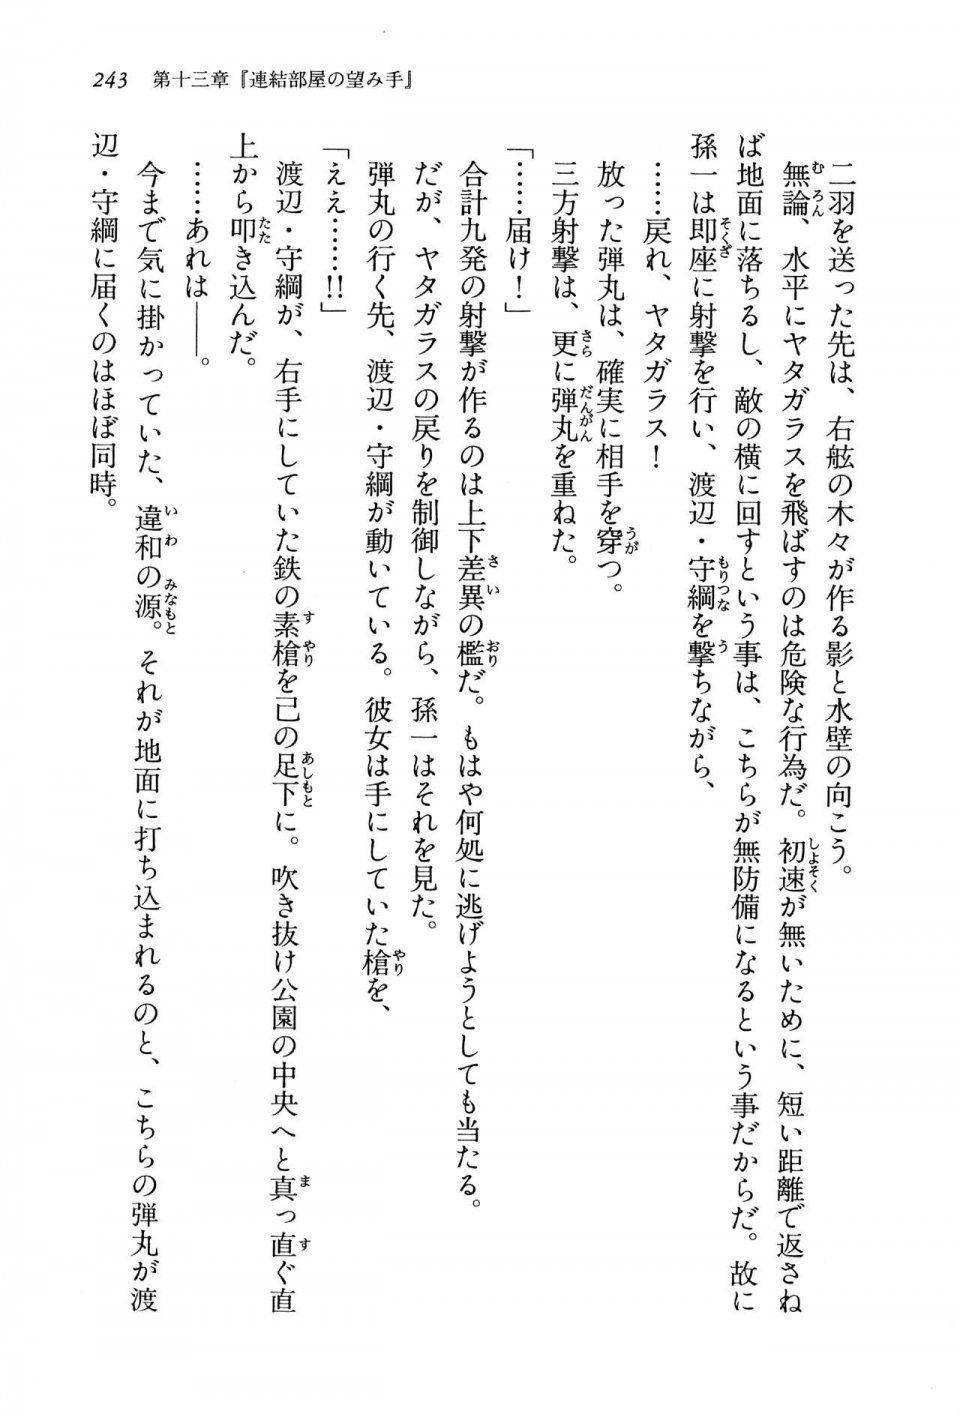 Kyoukai Senjou no Horizon BD Special Mininovel Vol 8(4B) - Photo #247